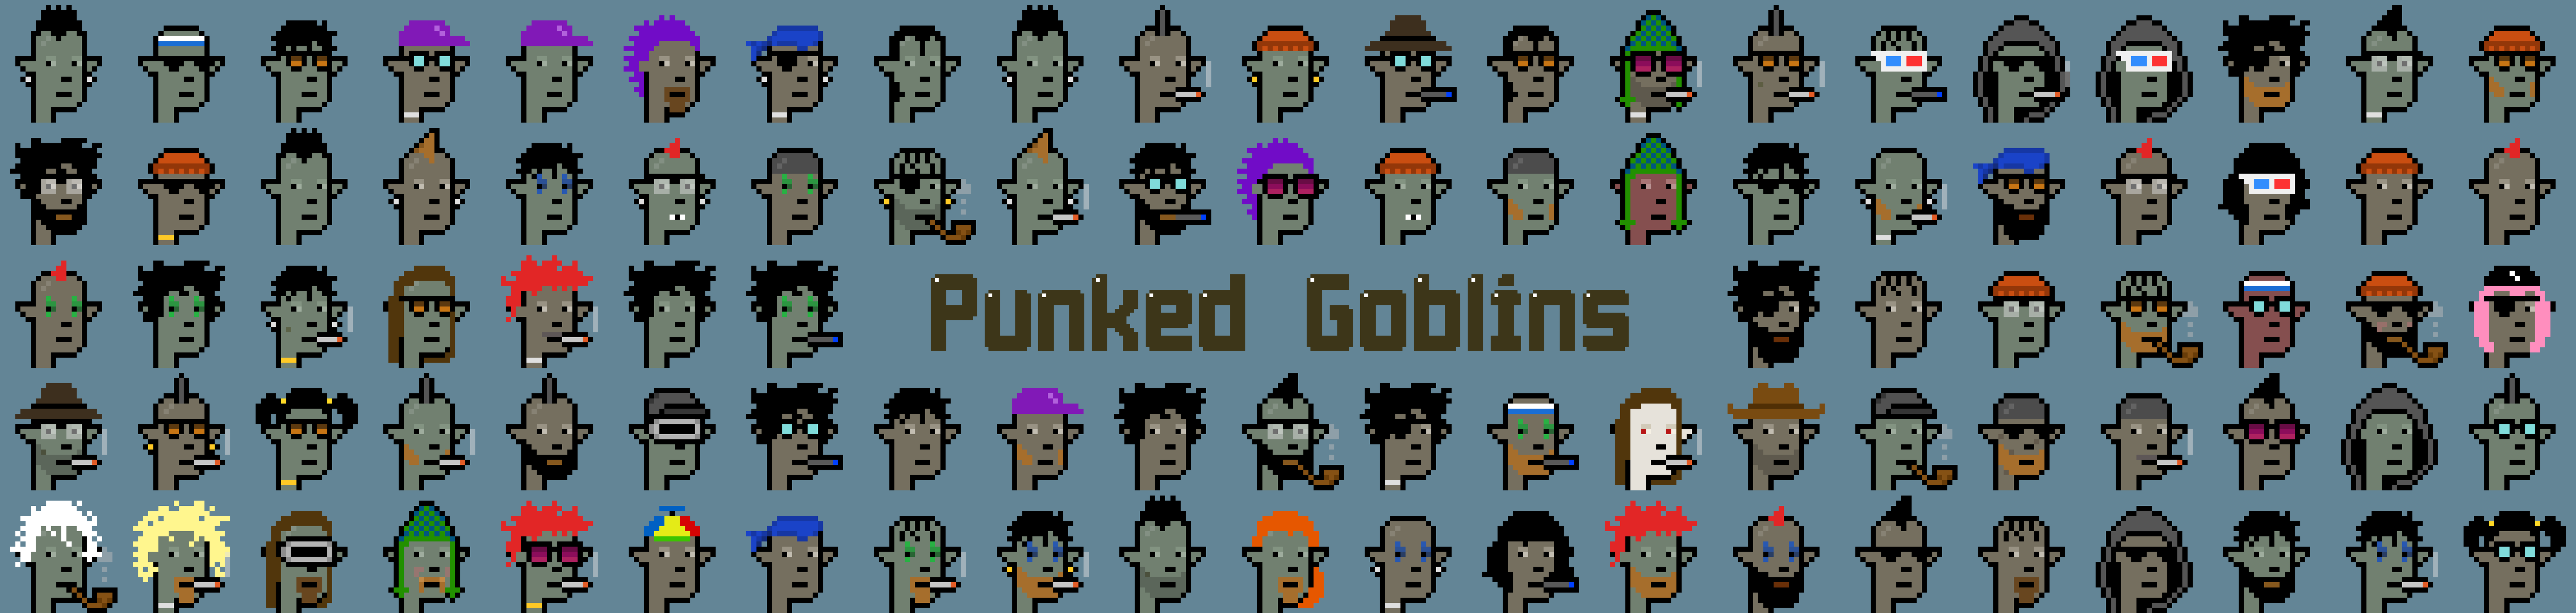 Punked Goblins